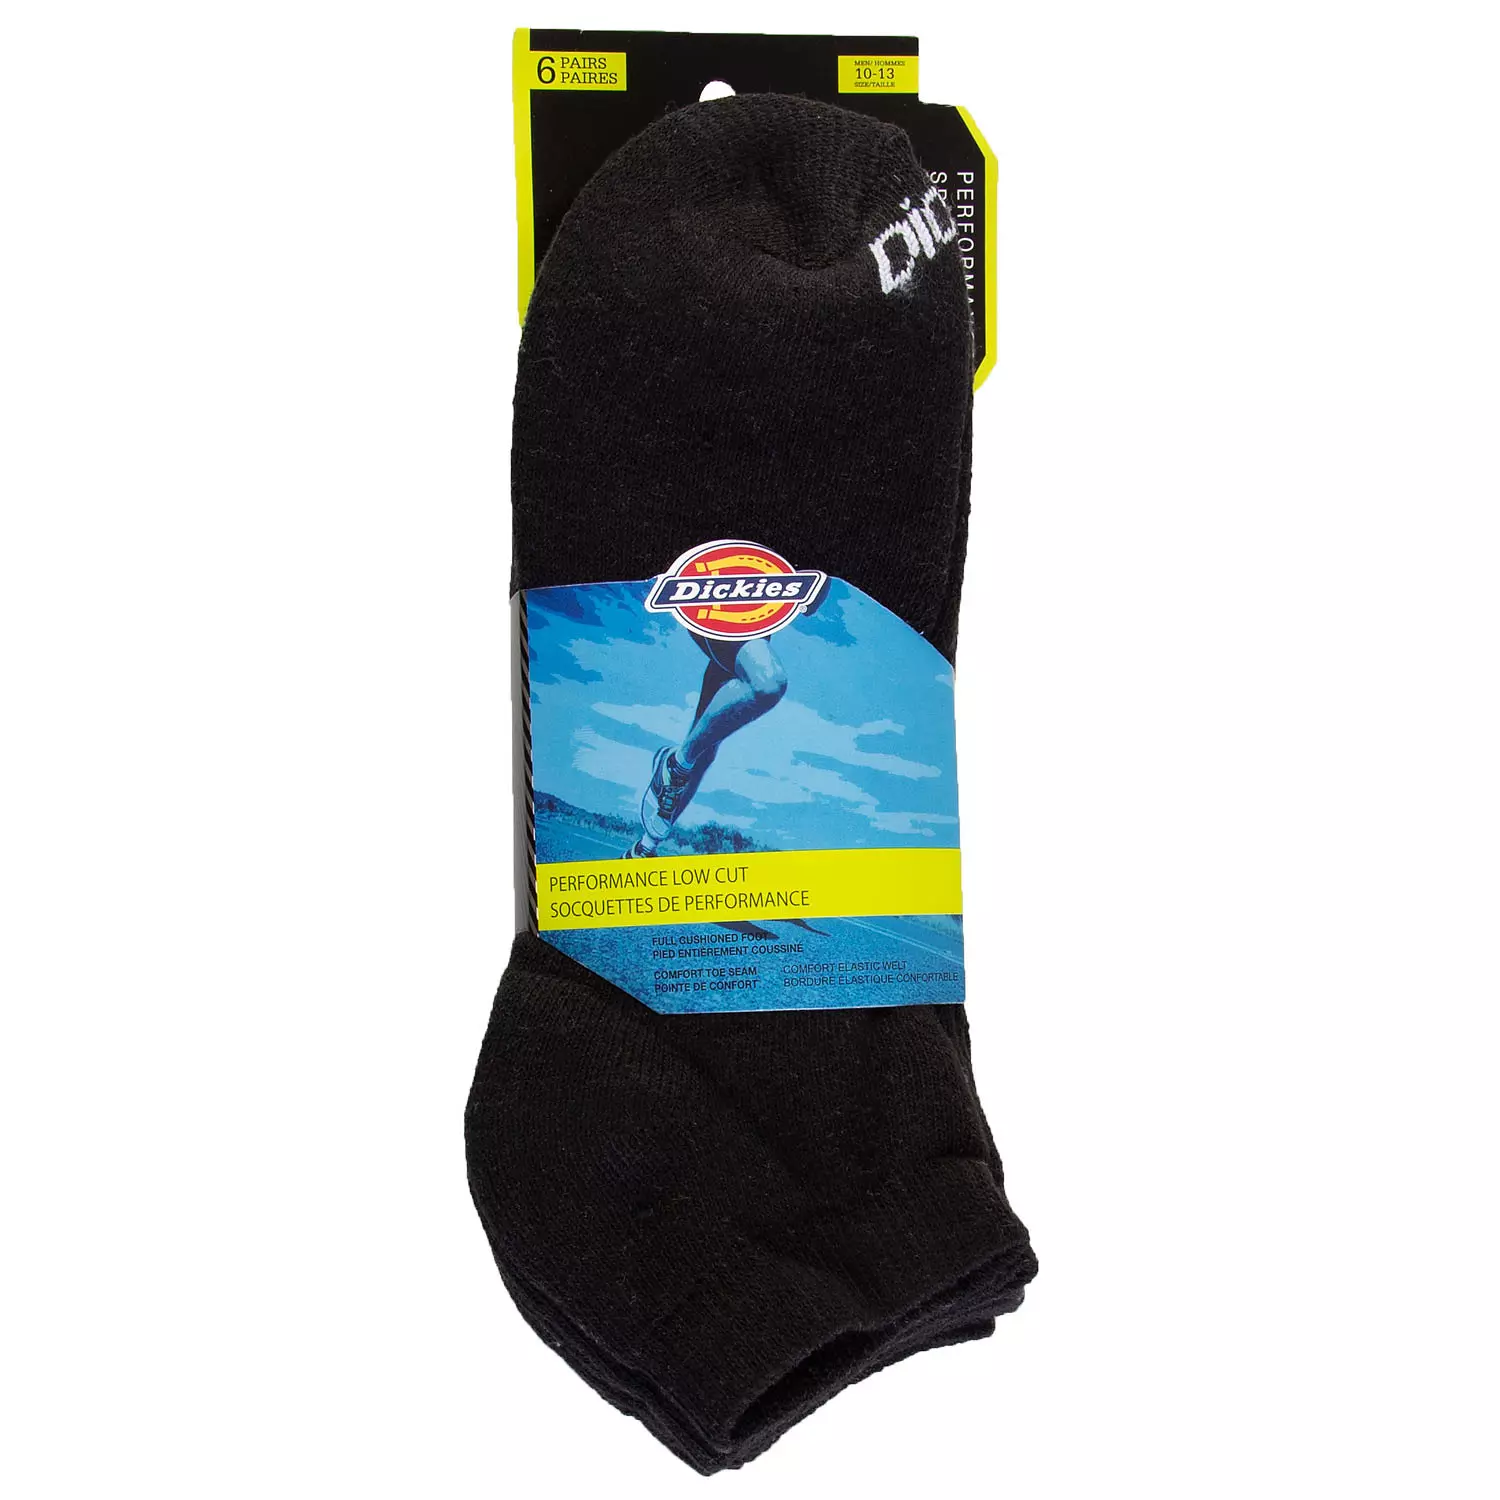 Dickies - Performance low cut socks, 6 pairs, black